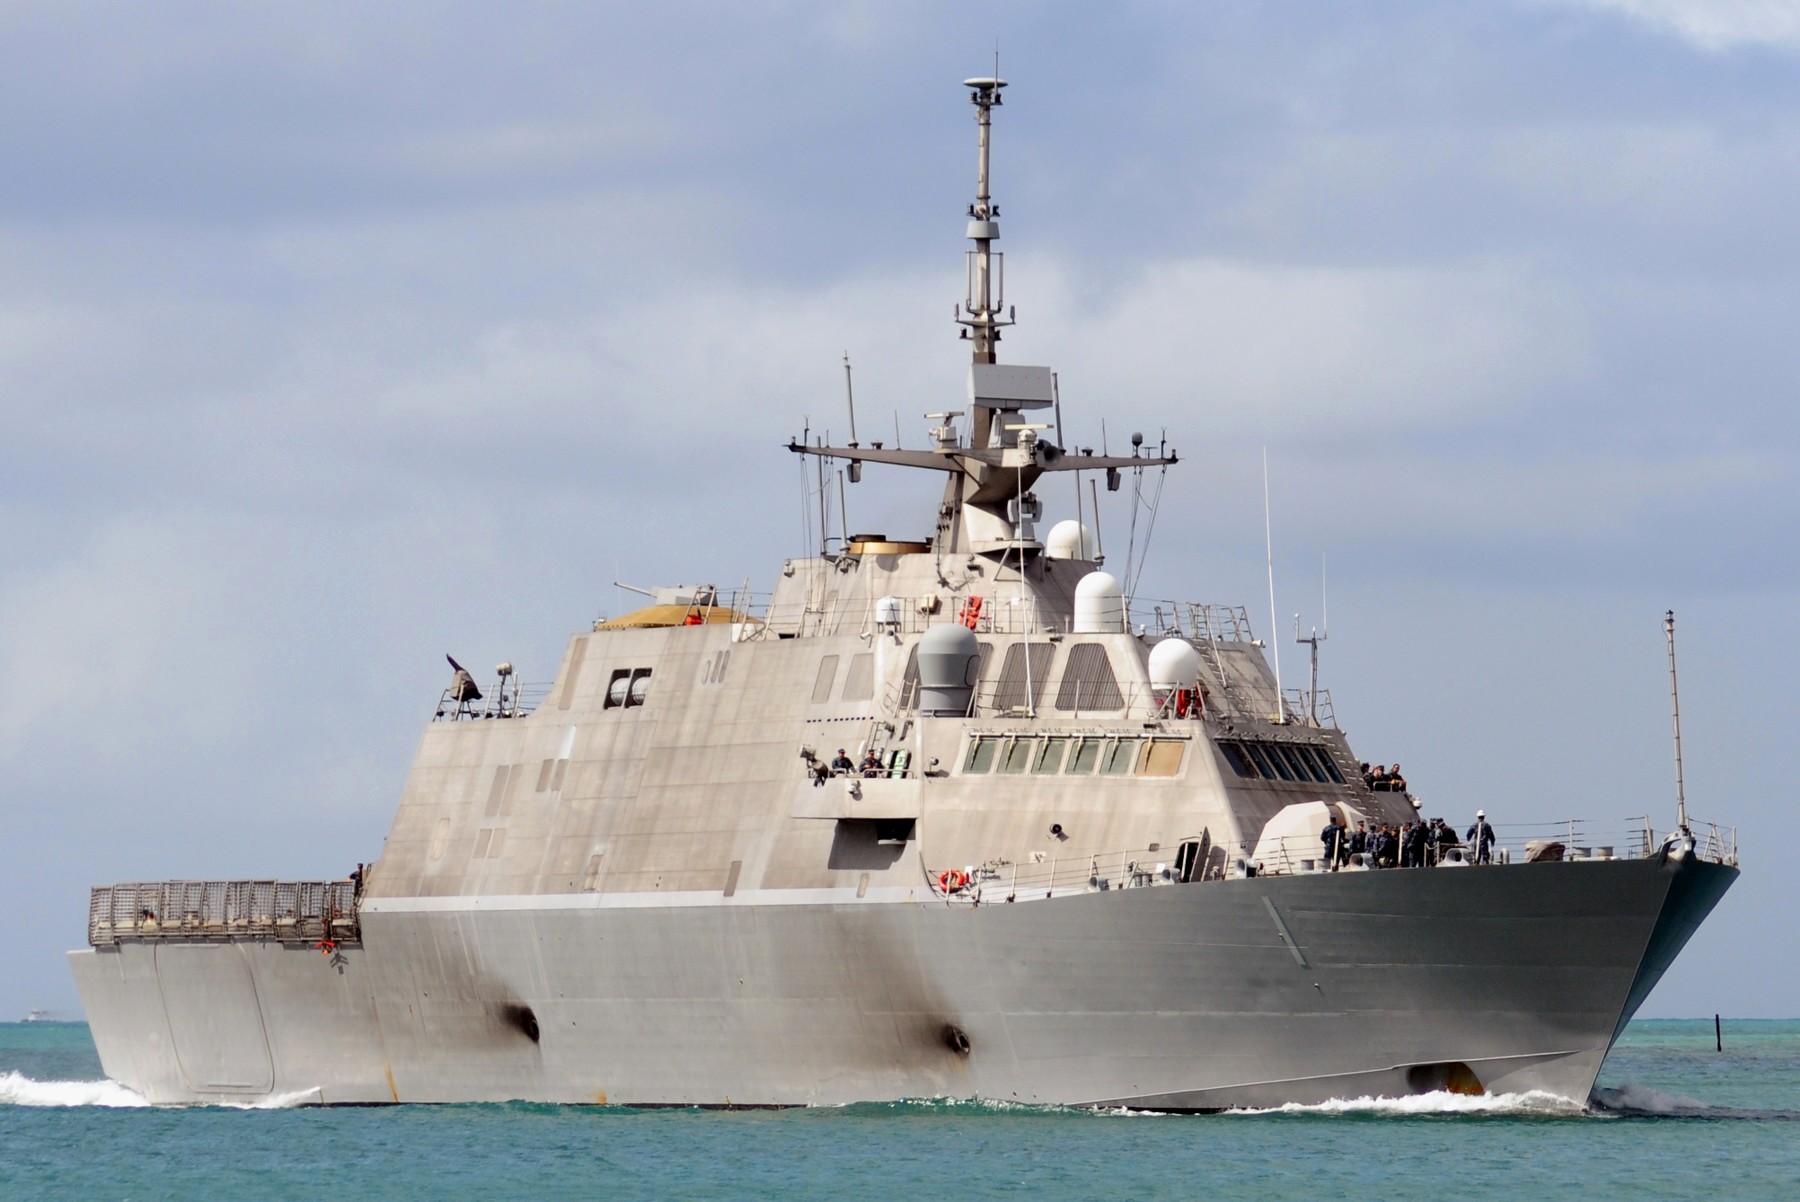 lcs-1 uss freedom class littoral combat ship us navy 72 rimpac 2010 pearl harbor hawaii